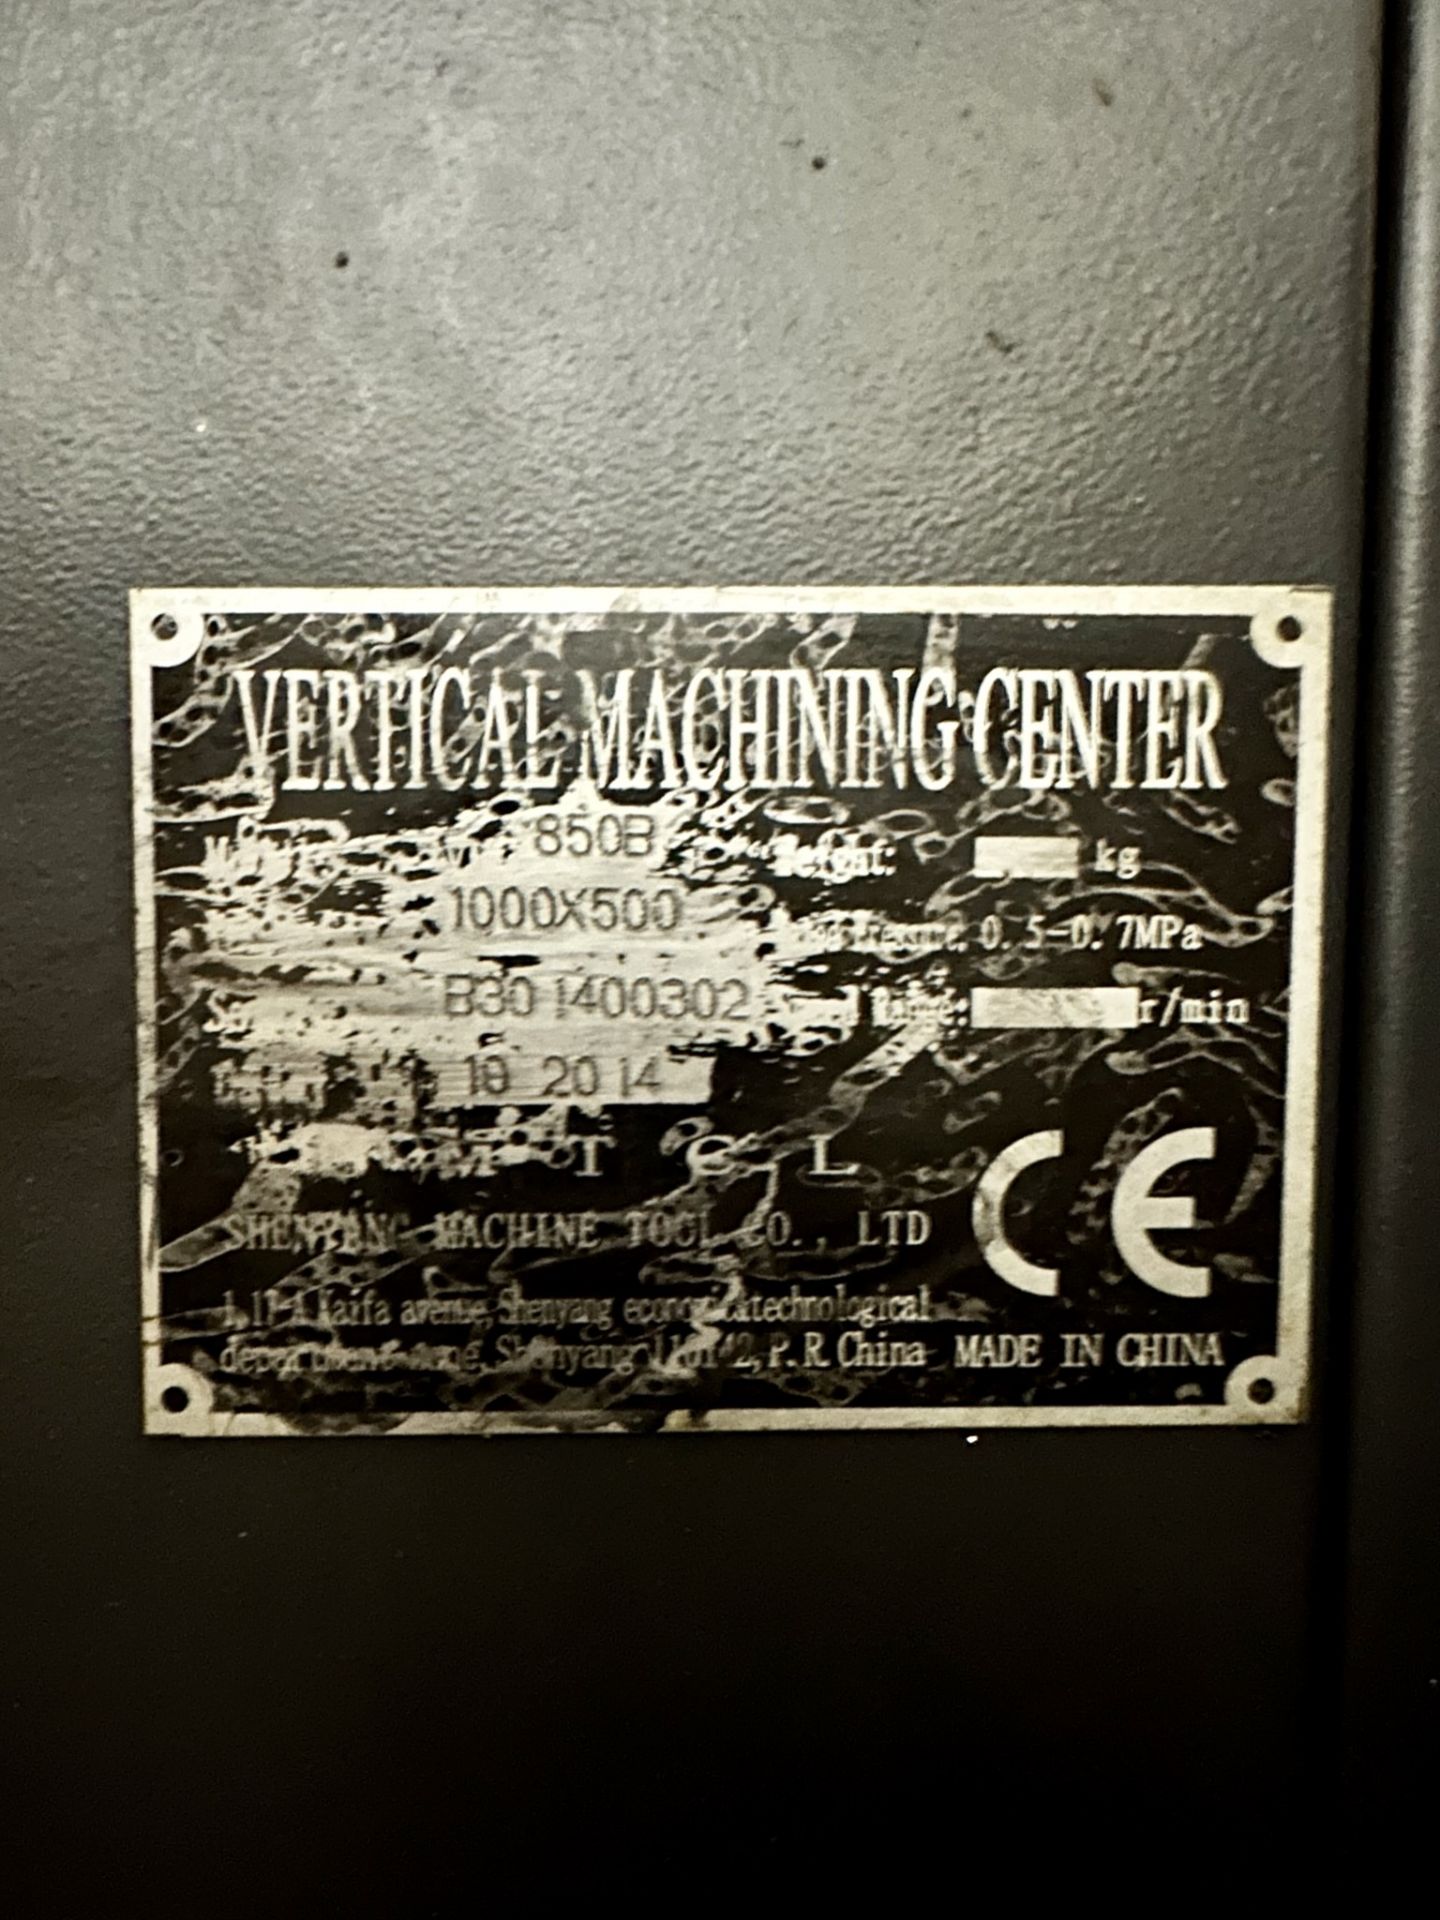 2014 SMTCL 850B VERTICAL MACHINING CENTER, FANUC SERIES Oi-MD CNC CONTROL, XYZ TRAVELS: 33" X 20" - Image 19 of 20